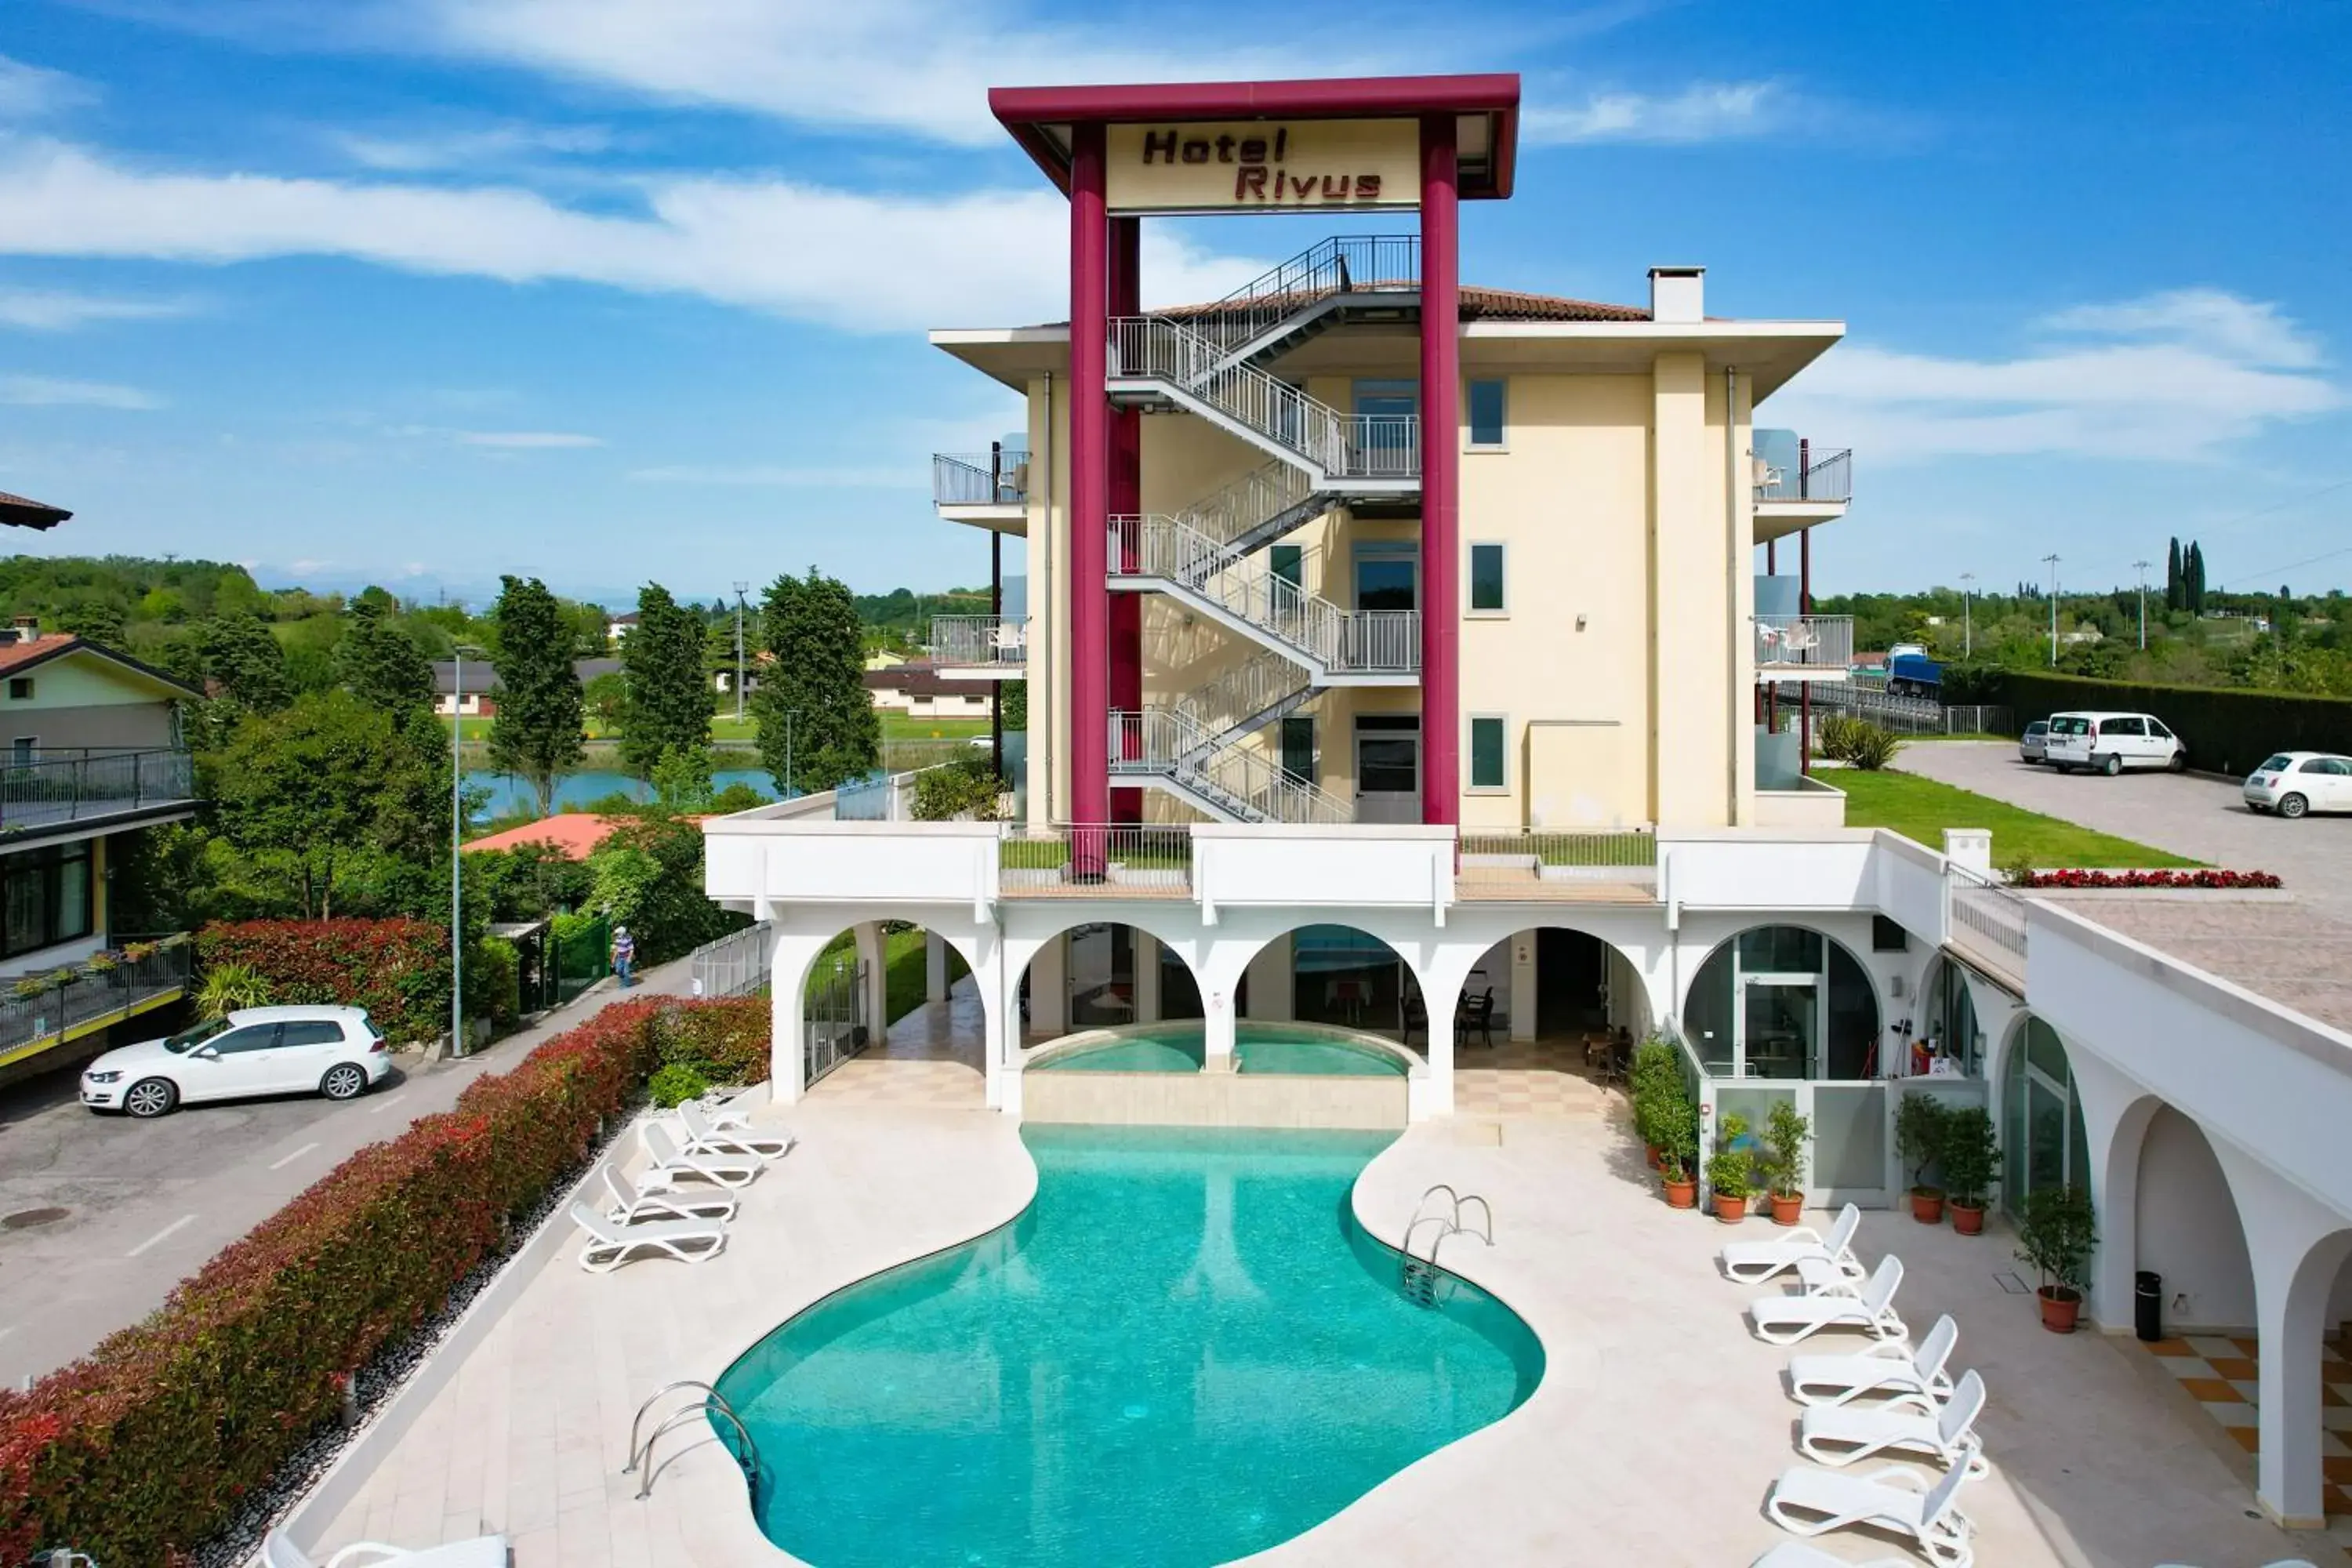 Pool View in Hotel Rivus